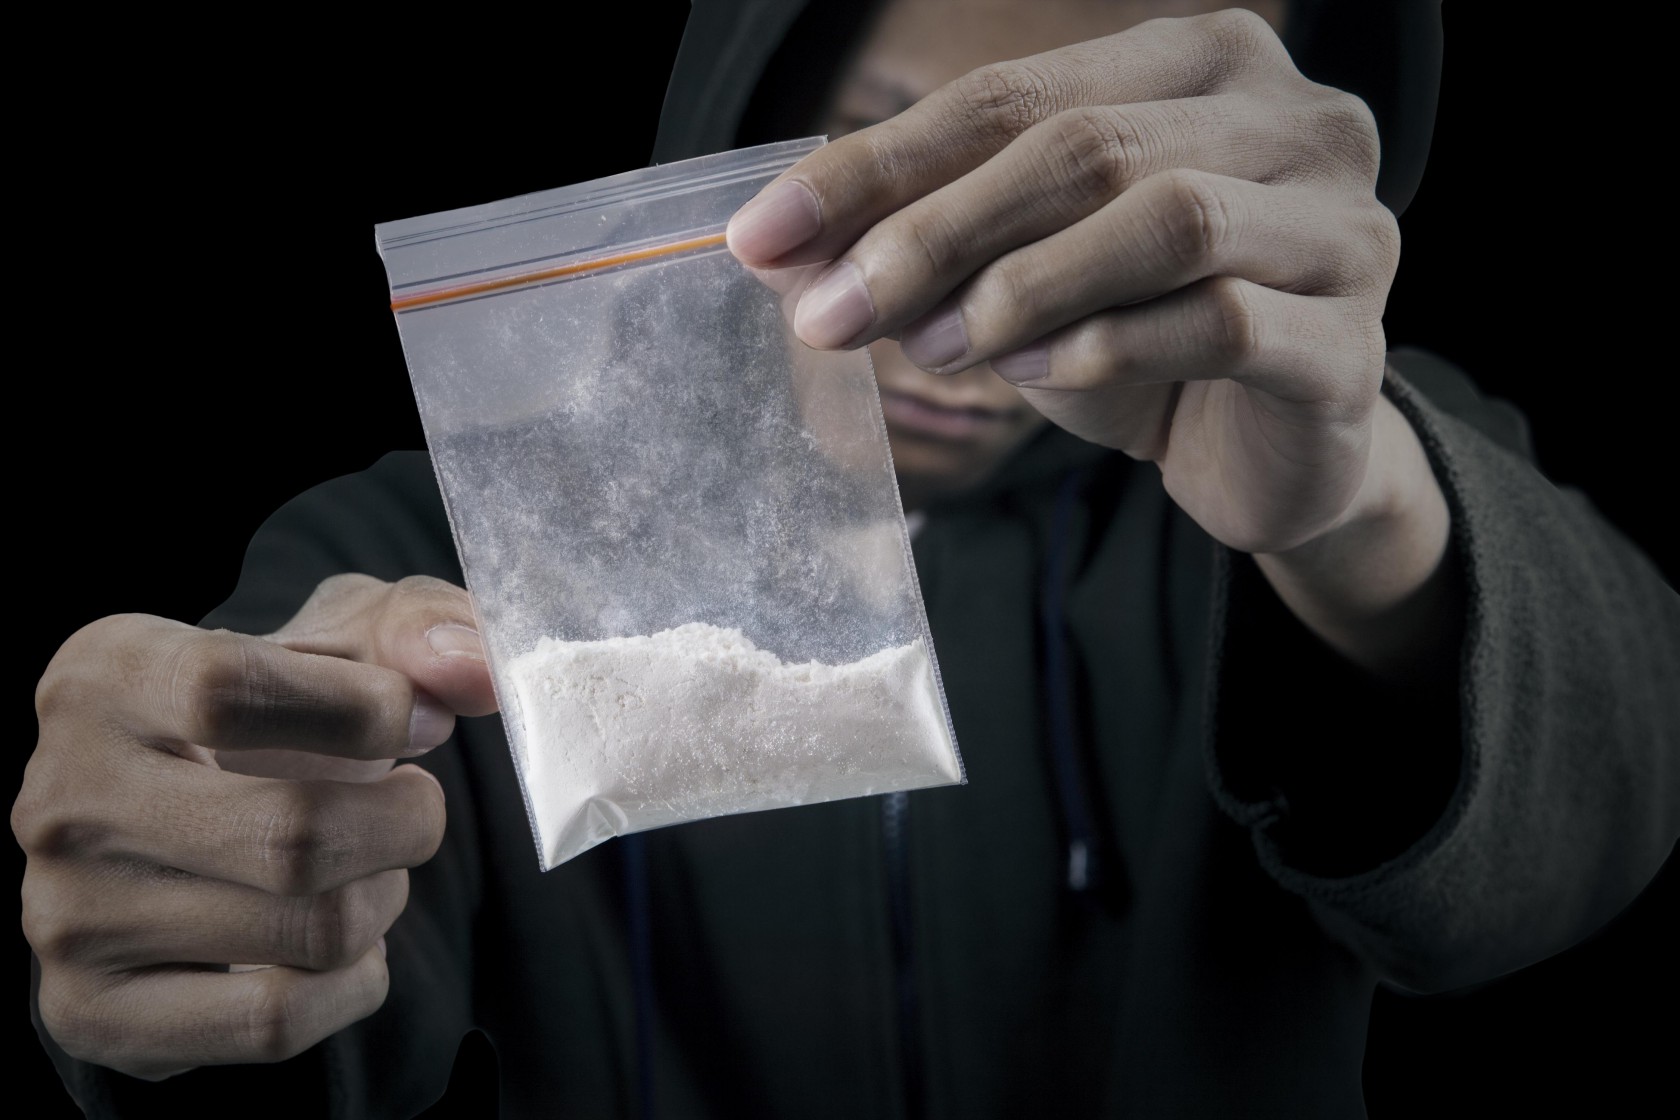 Drug dealer is preparing packet of heroin or cocaine